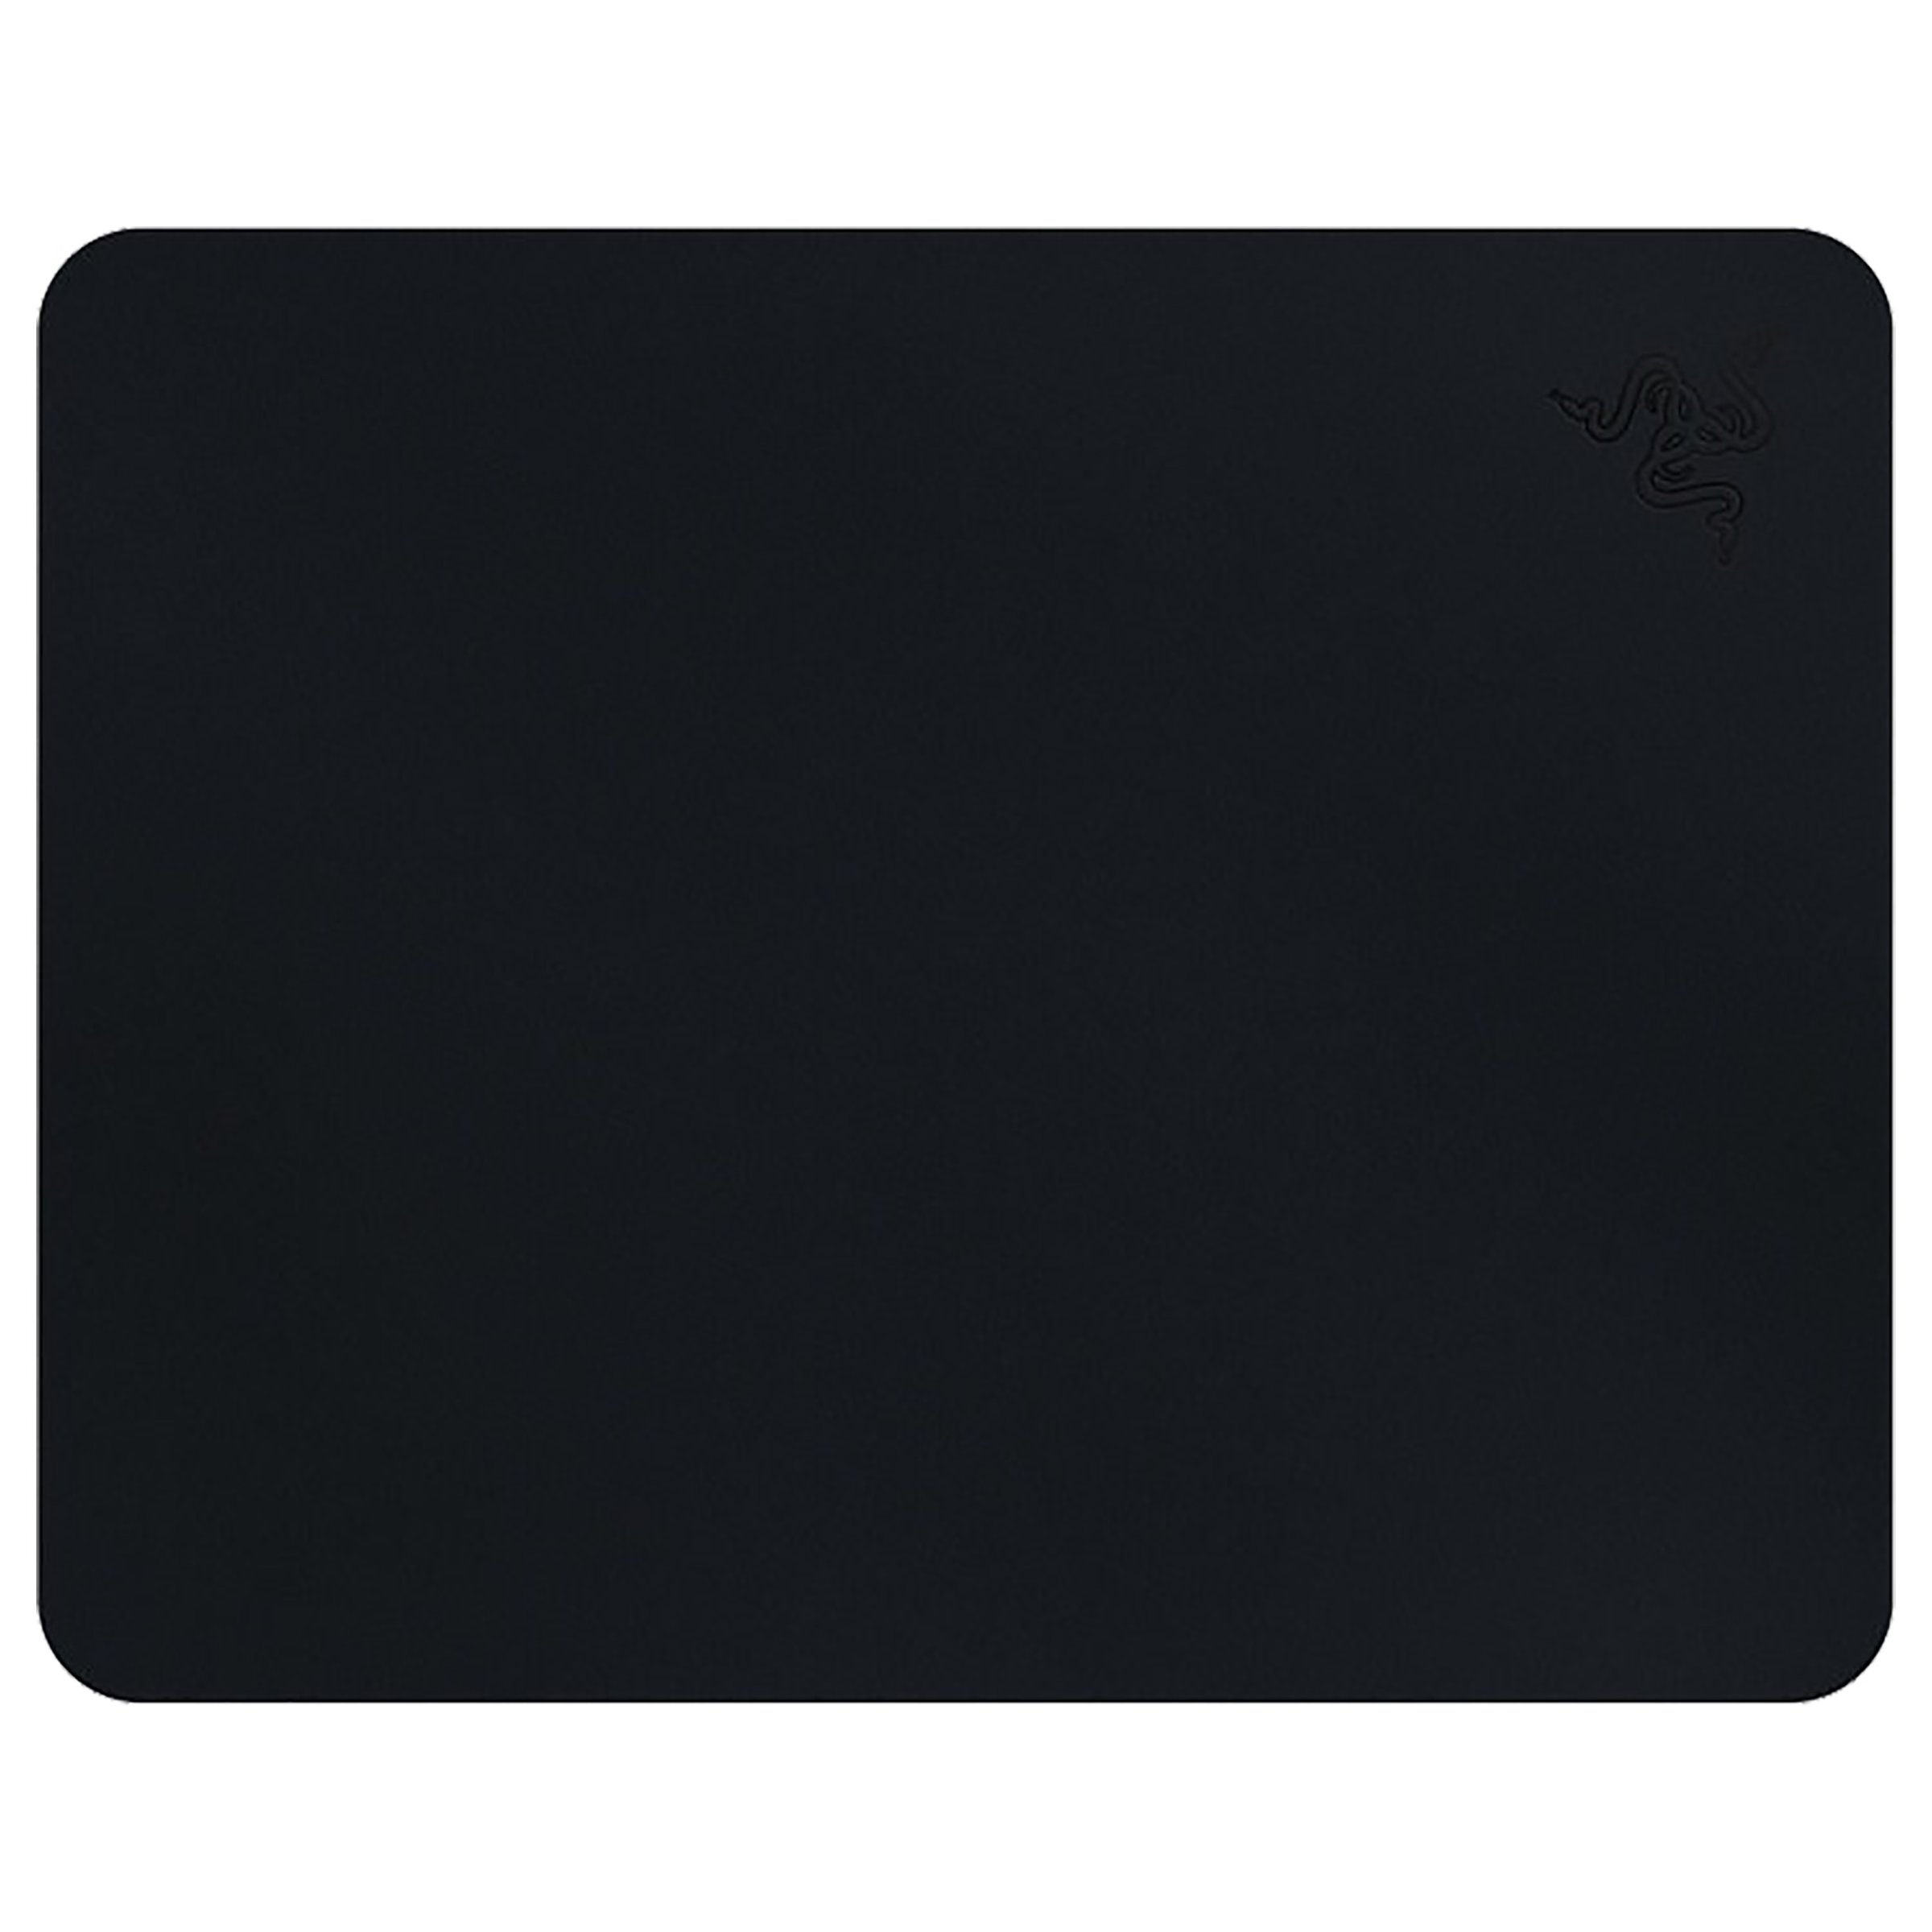 Razer Goliathus Mousepad For Mouse (Ultra Slim, RZ02-01820500-R3M1, Black)_1